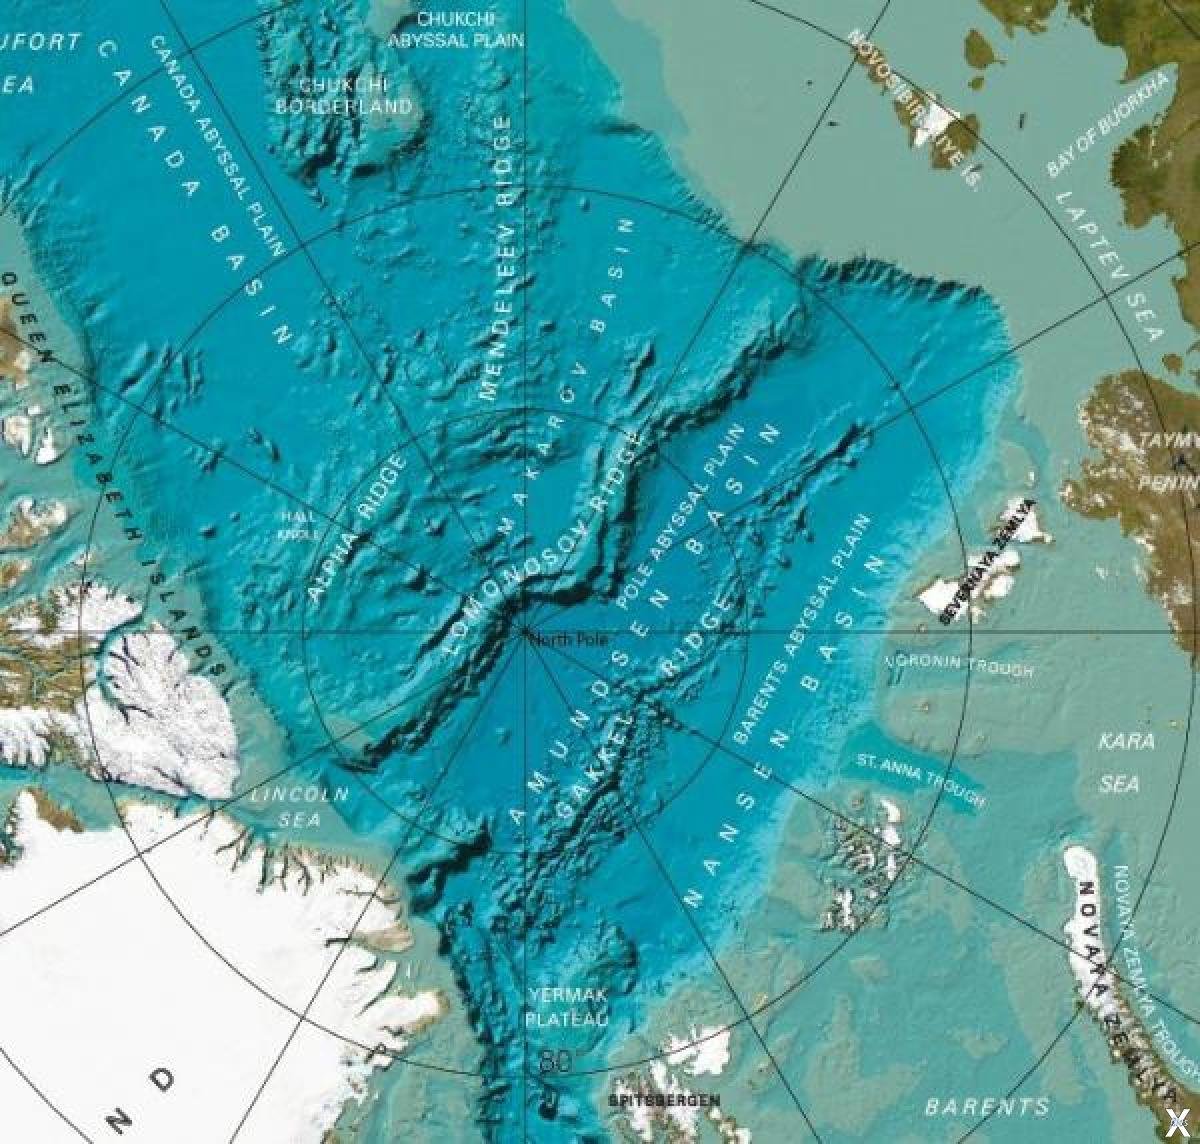 Координаты северного океана. Арктика хребет Ломоносова. Хребет Ломоносова в Северном Ледовитом океане. Хребты Ломоносова и Менделеева. Хребет Ломоносова в Северном Ледовитом океане на карте.